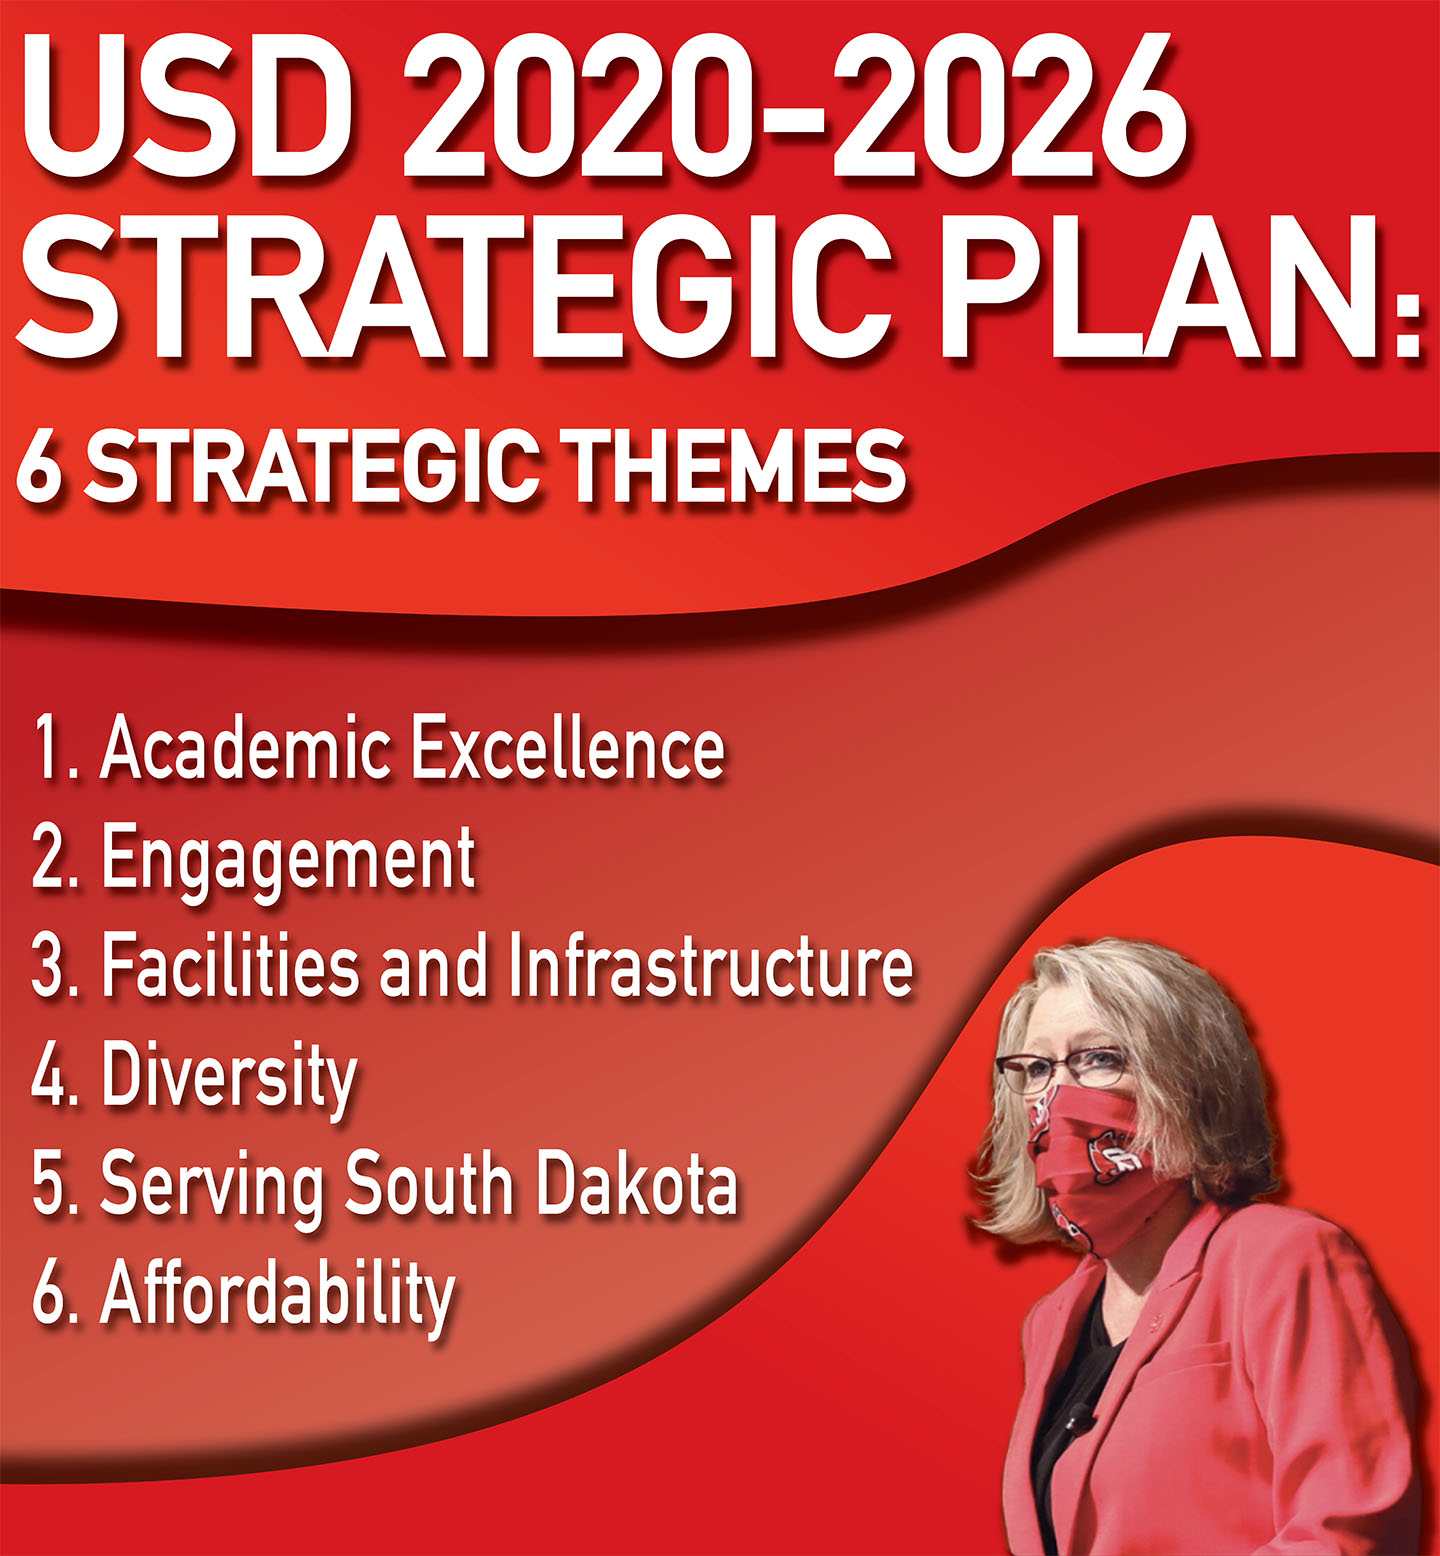 Gestring reveals university’s 5-year strategic plan